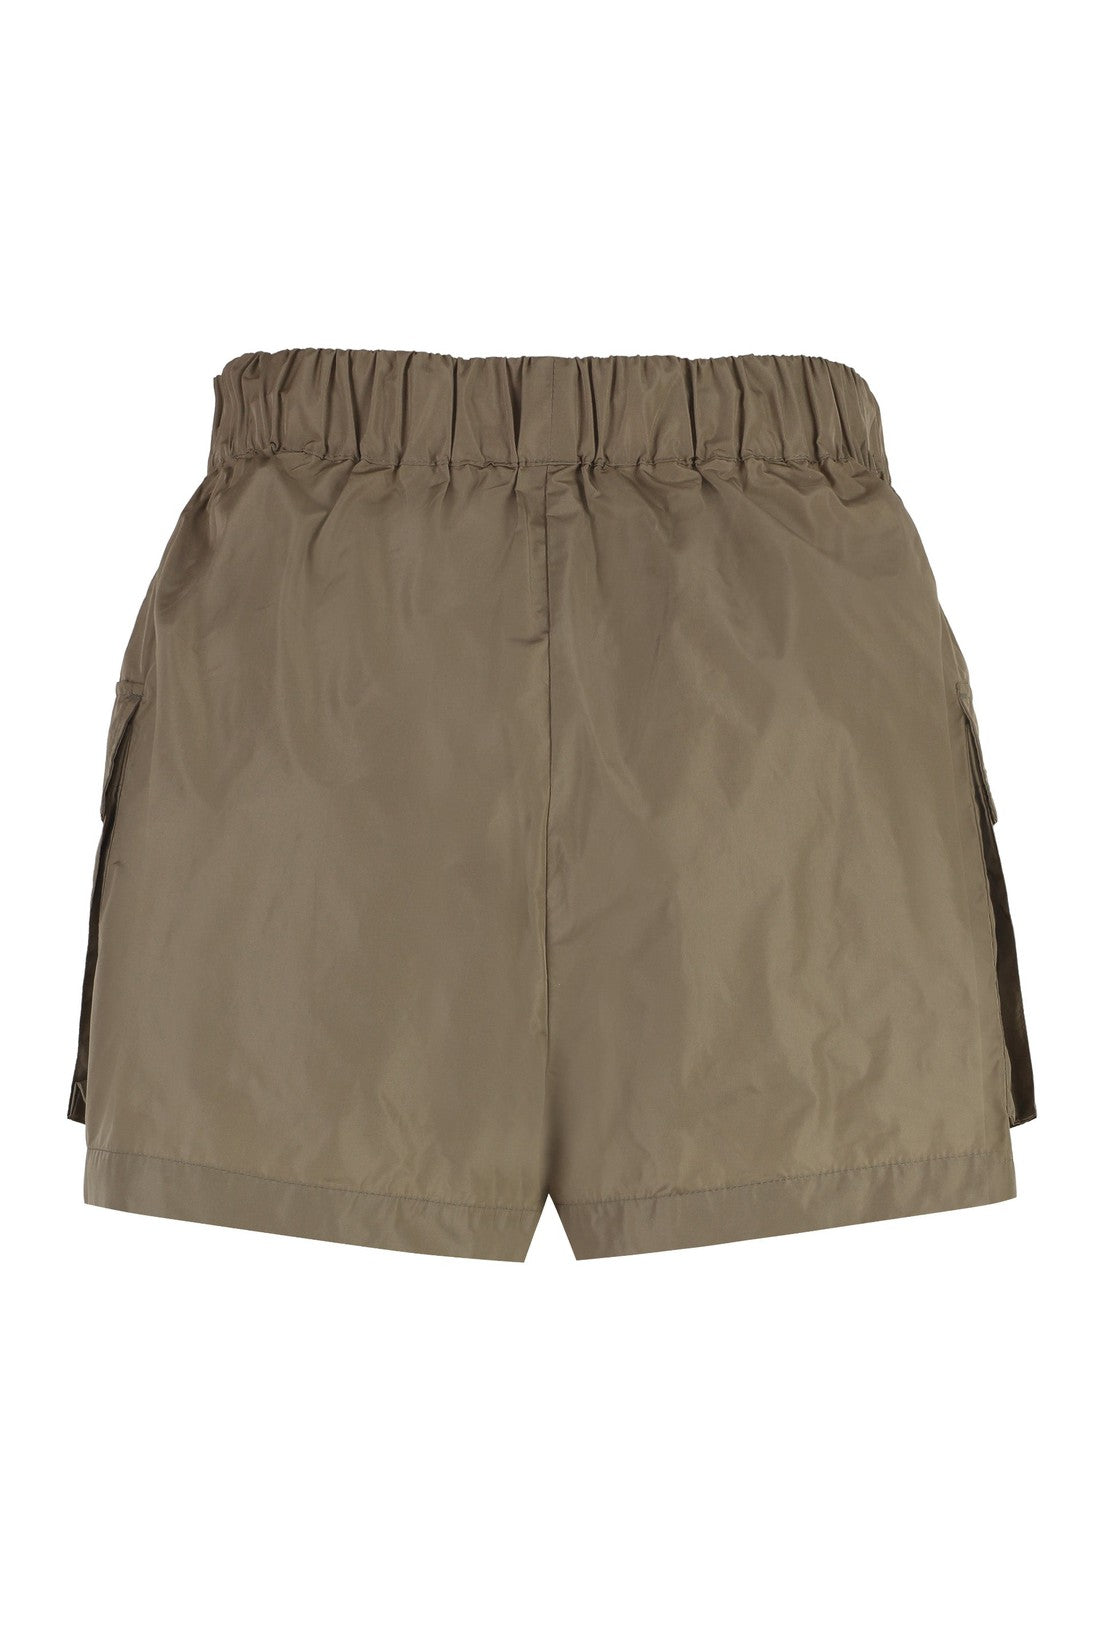 MSGM-OUTLET-SALE-Techno fabric shorts-ARCHIVIST